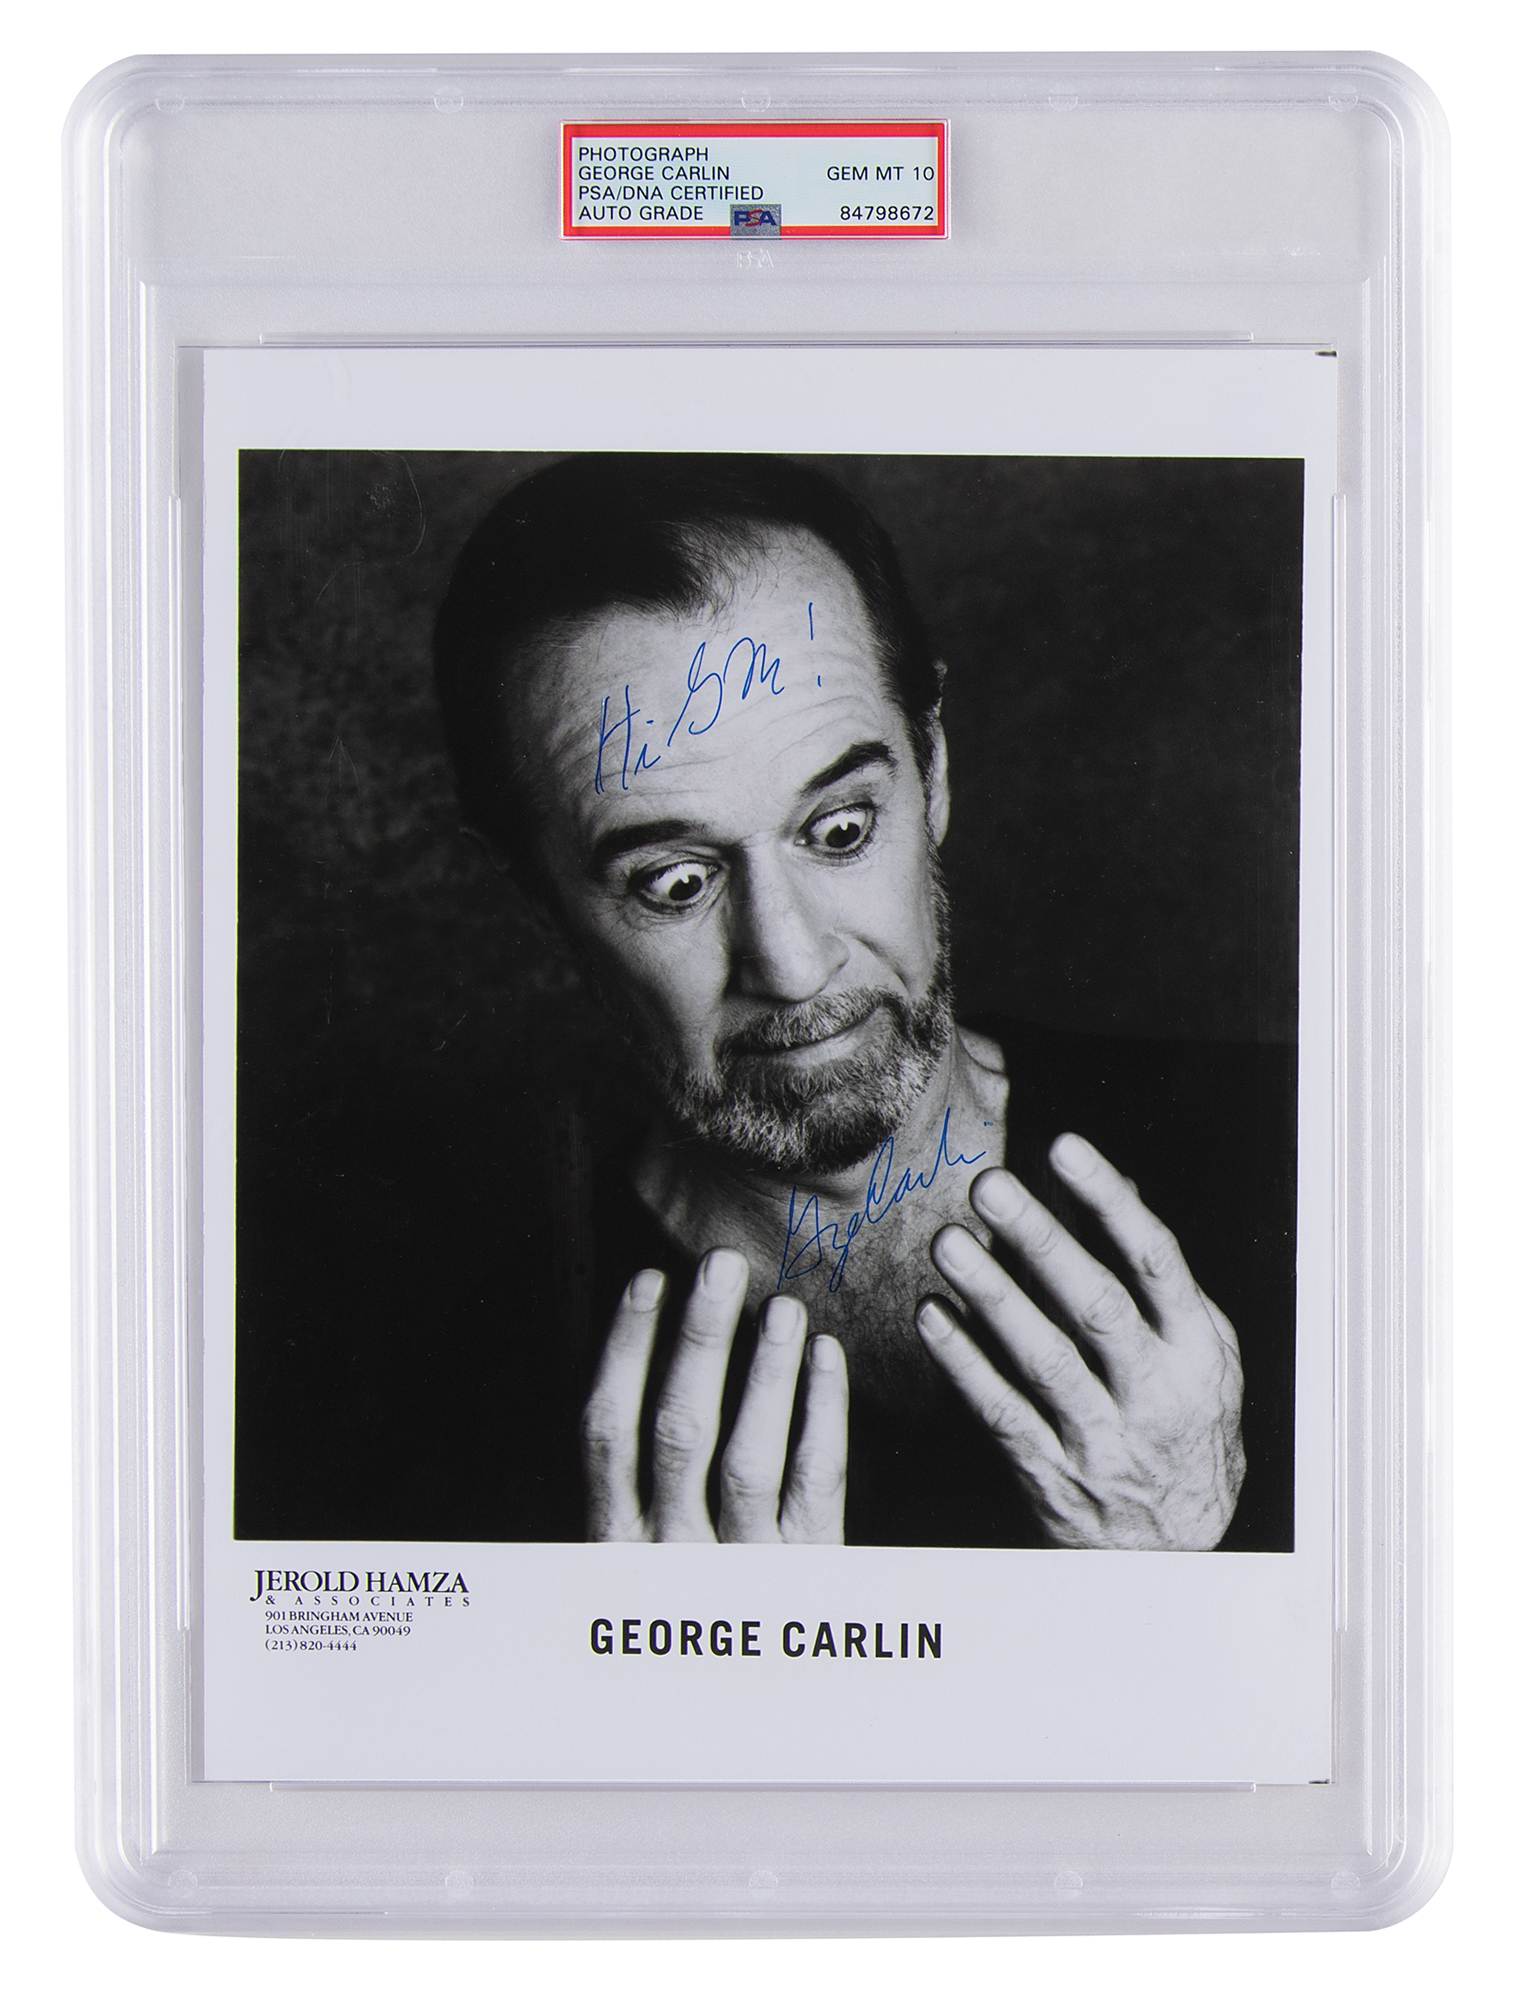 Lot #7396 George Carlin Signed Photograph - PSA GEM MT 10